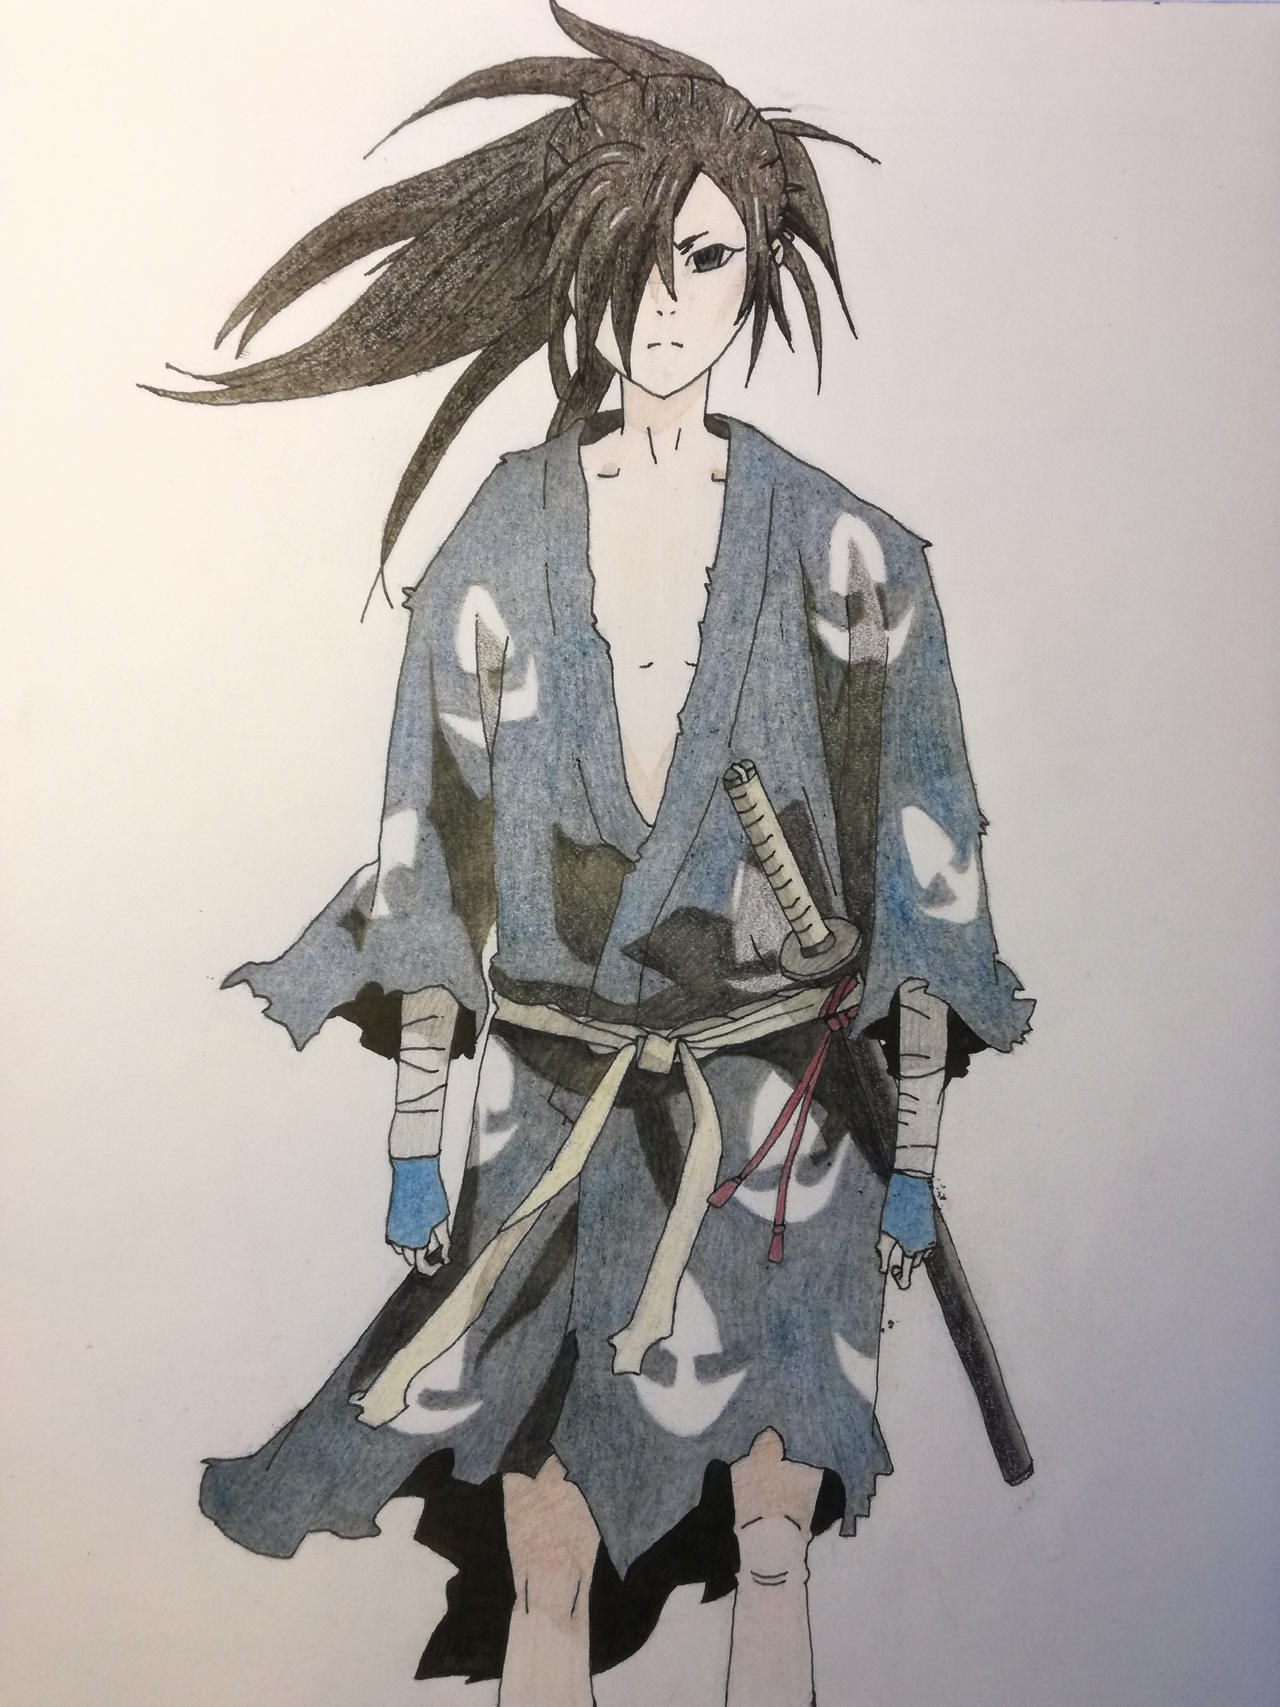 Hyakkimaru Art From The Anime Dororo – Paint By Number